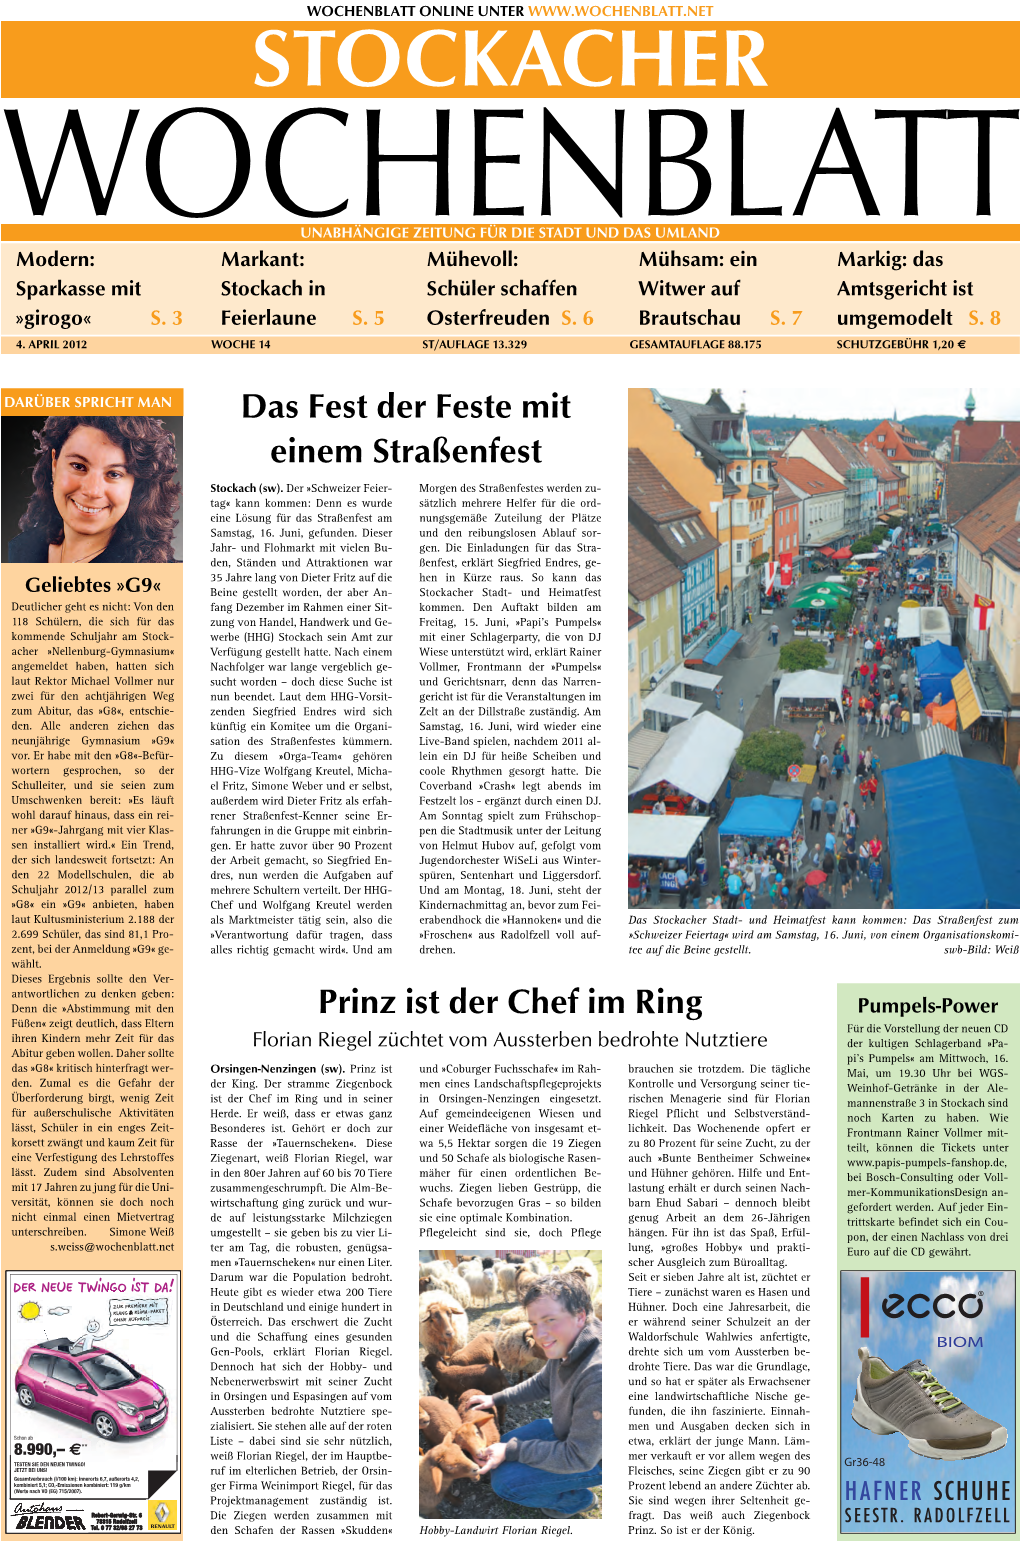 Singener Wochenblatt Vom 4. April 2012